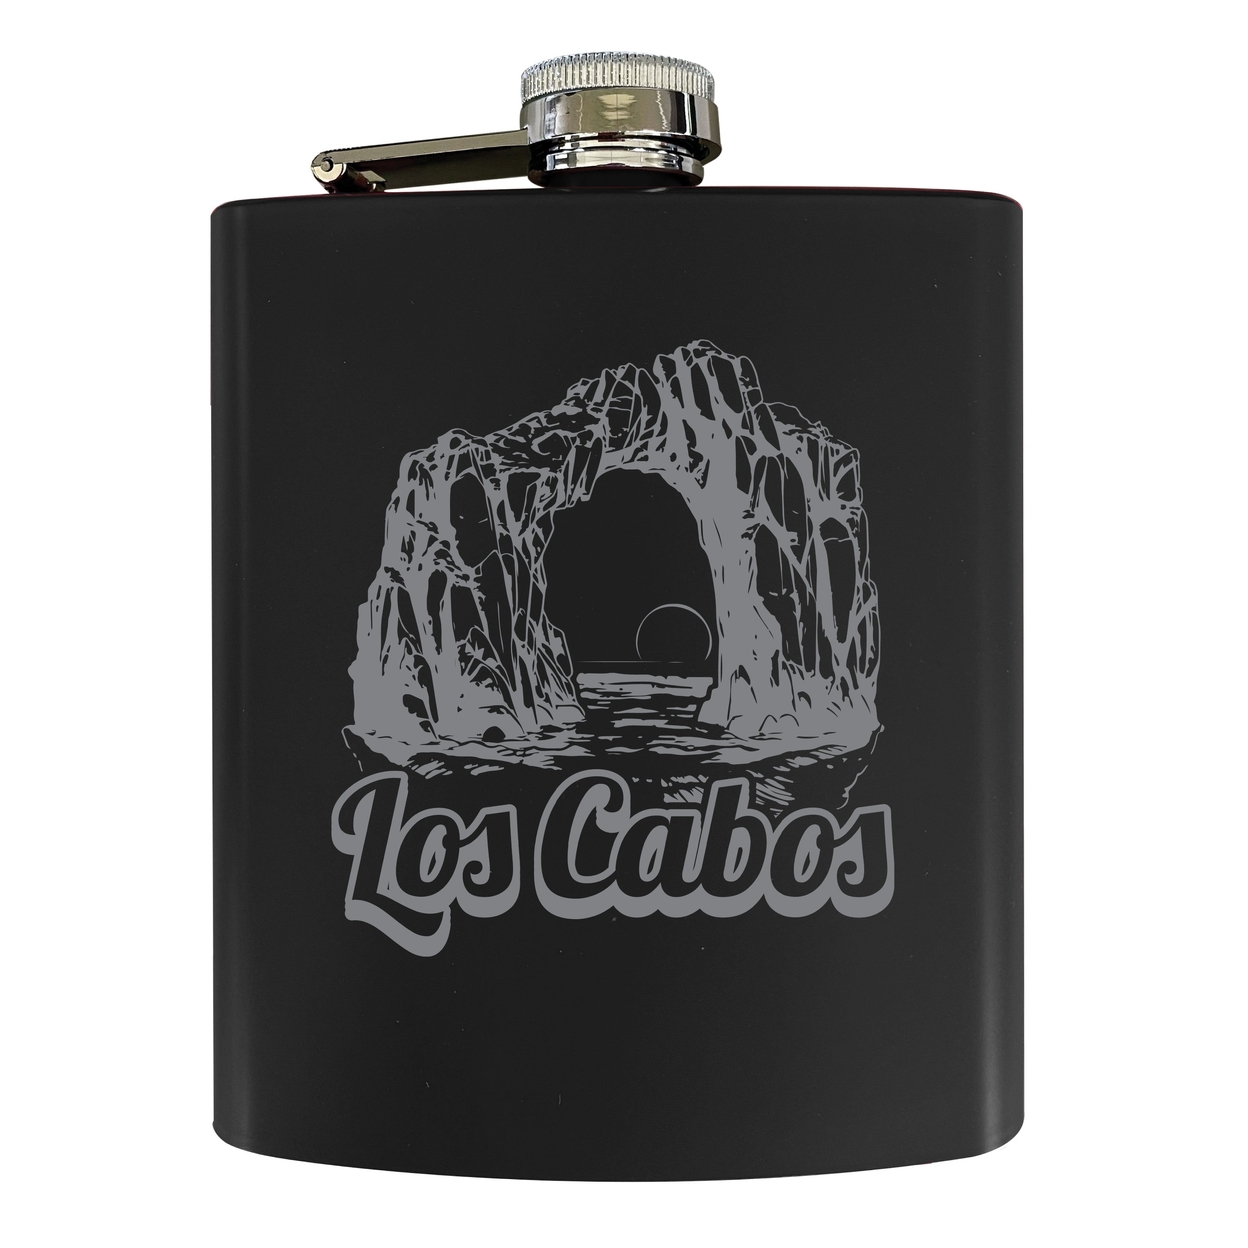 Los Cabos Mexico Souvenir 7 Oz Engraved Steel Flask Matte Finish - Red,,Single Unit